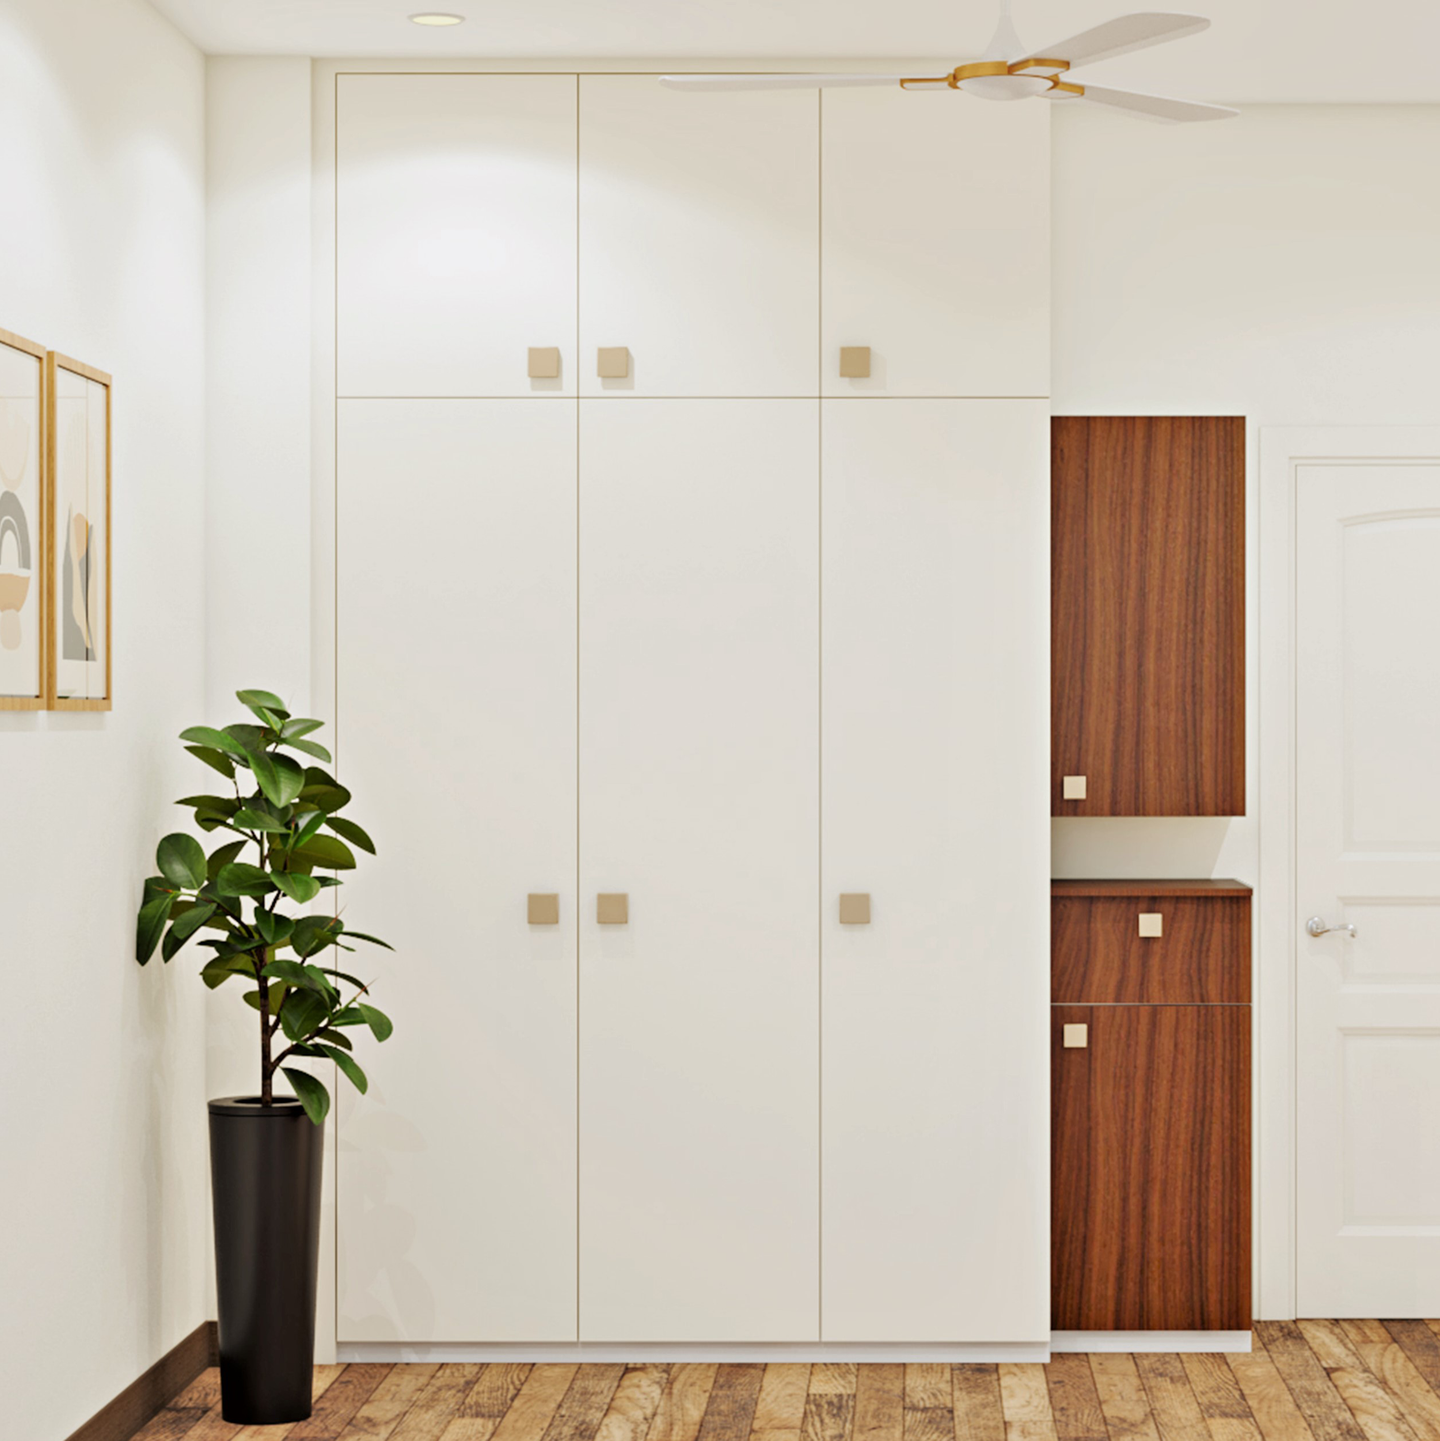 Classy White Finish Modern Wardrobe Design For Rental Homes - Livspace